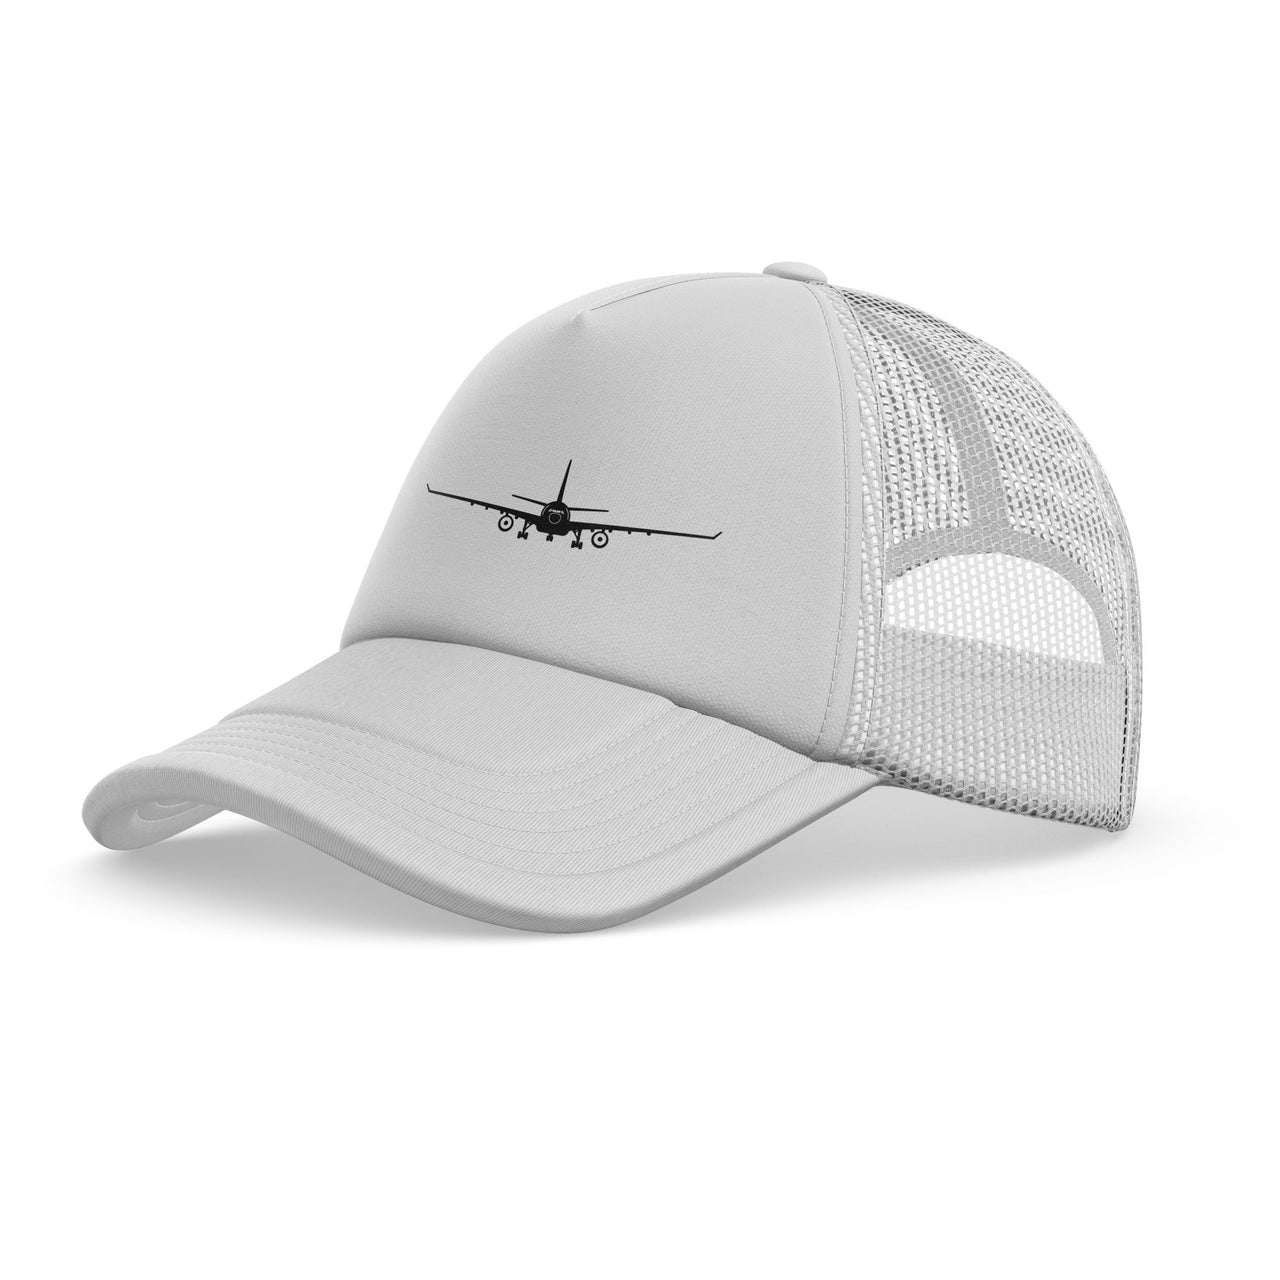 Airbus A330 Silhouette Designed Trucker Caps & Hats